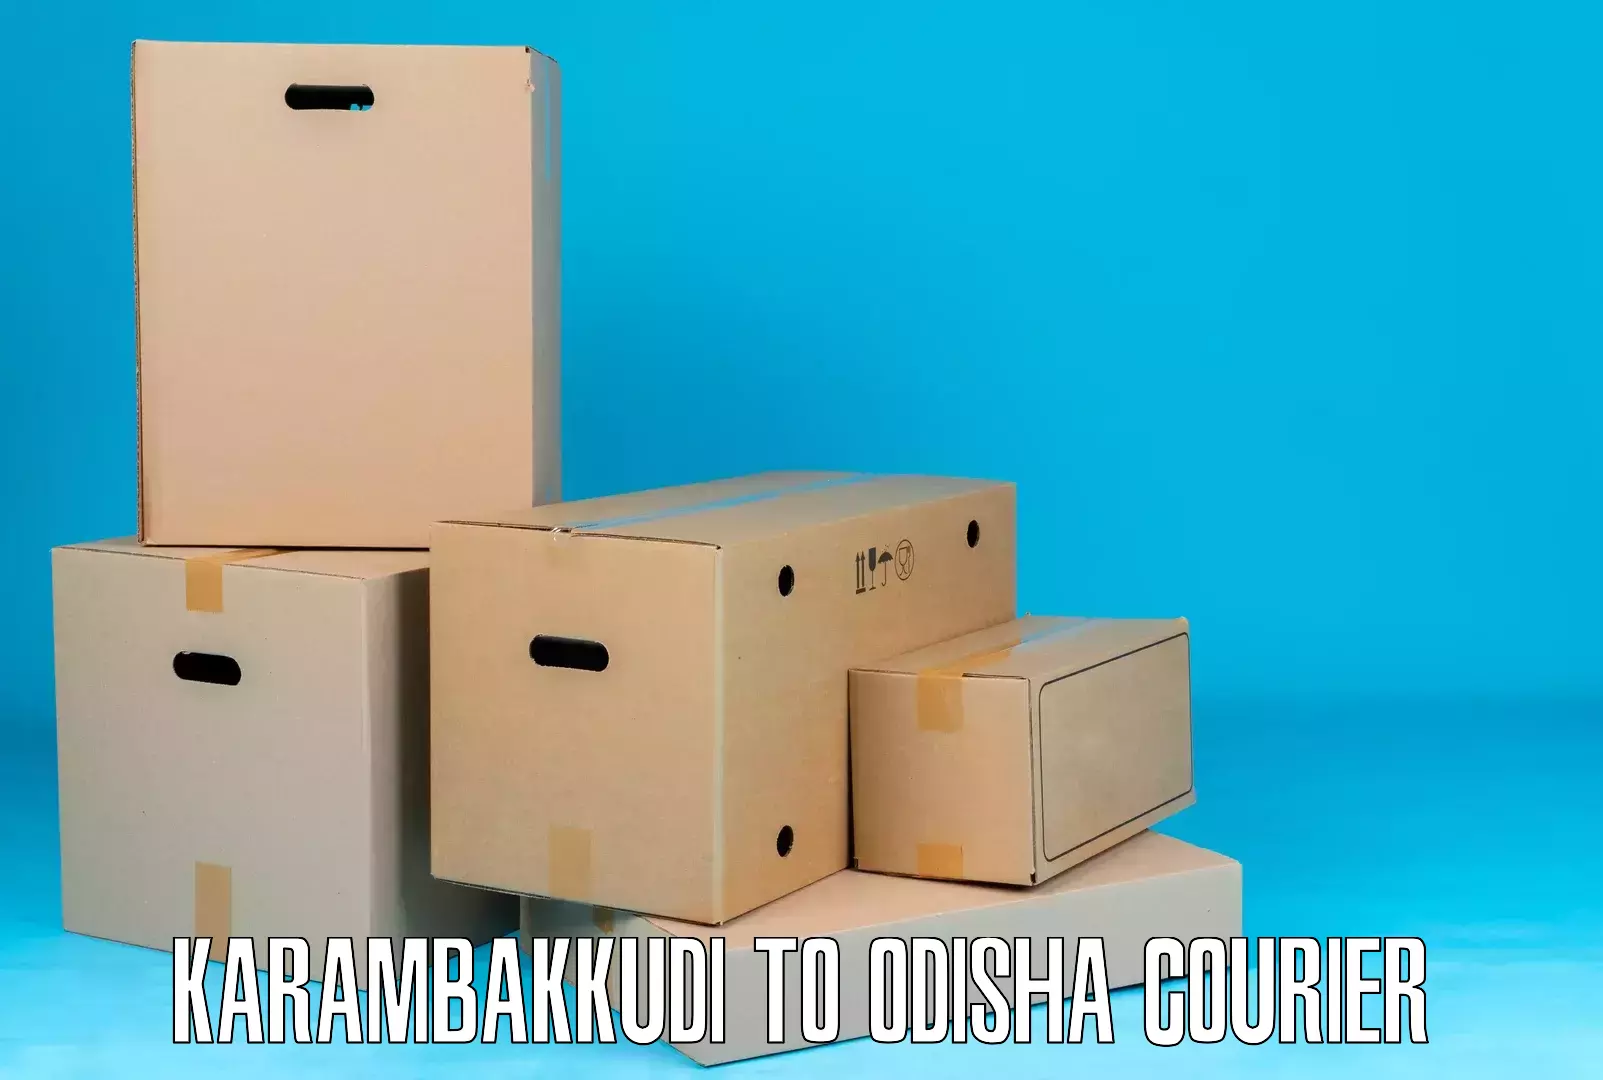 Courier service comparison Karambakkudi to Karanjia